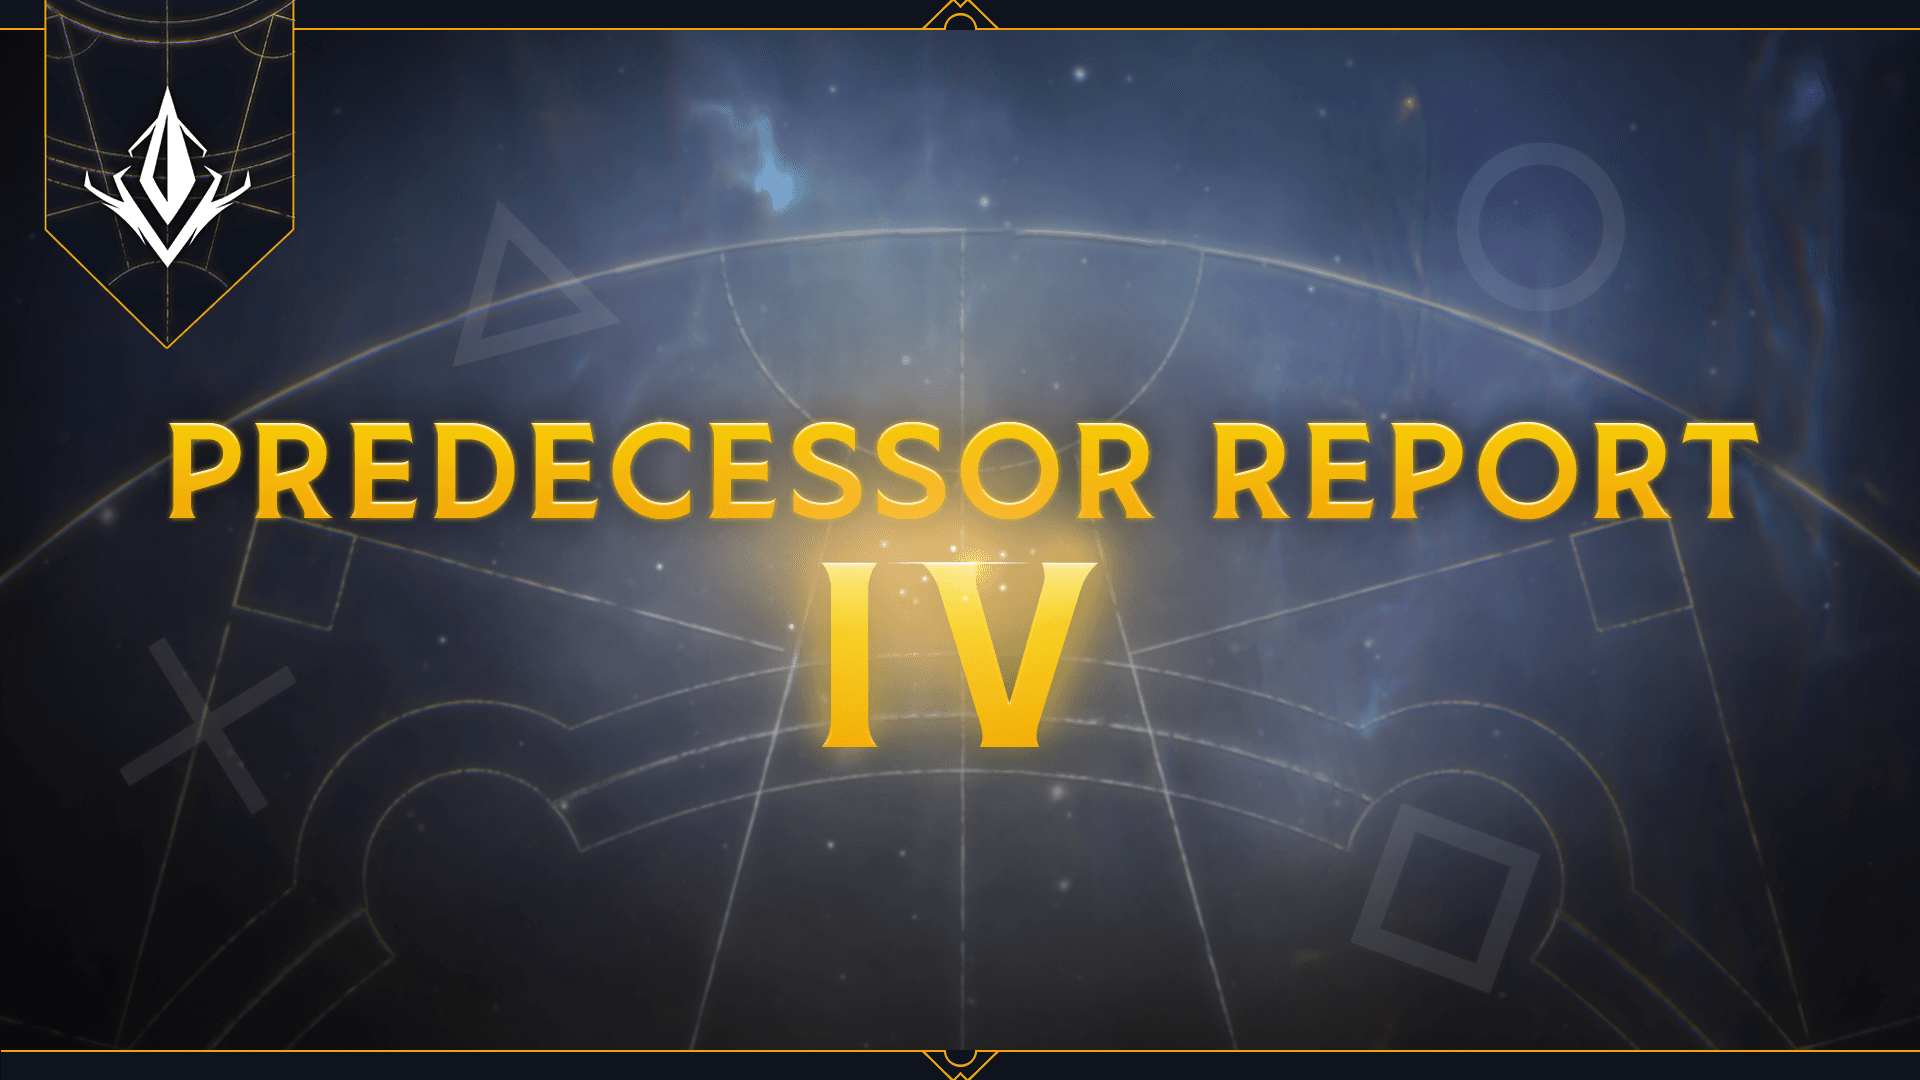 Predecessor Report IV